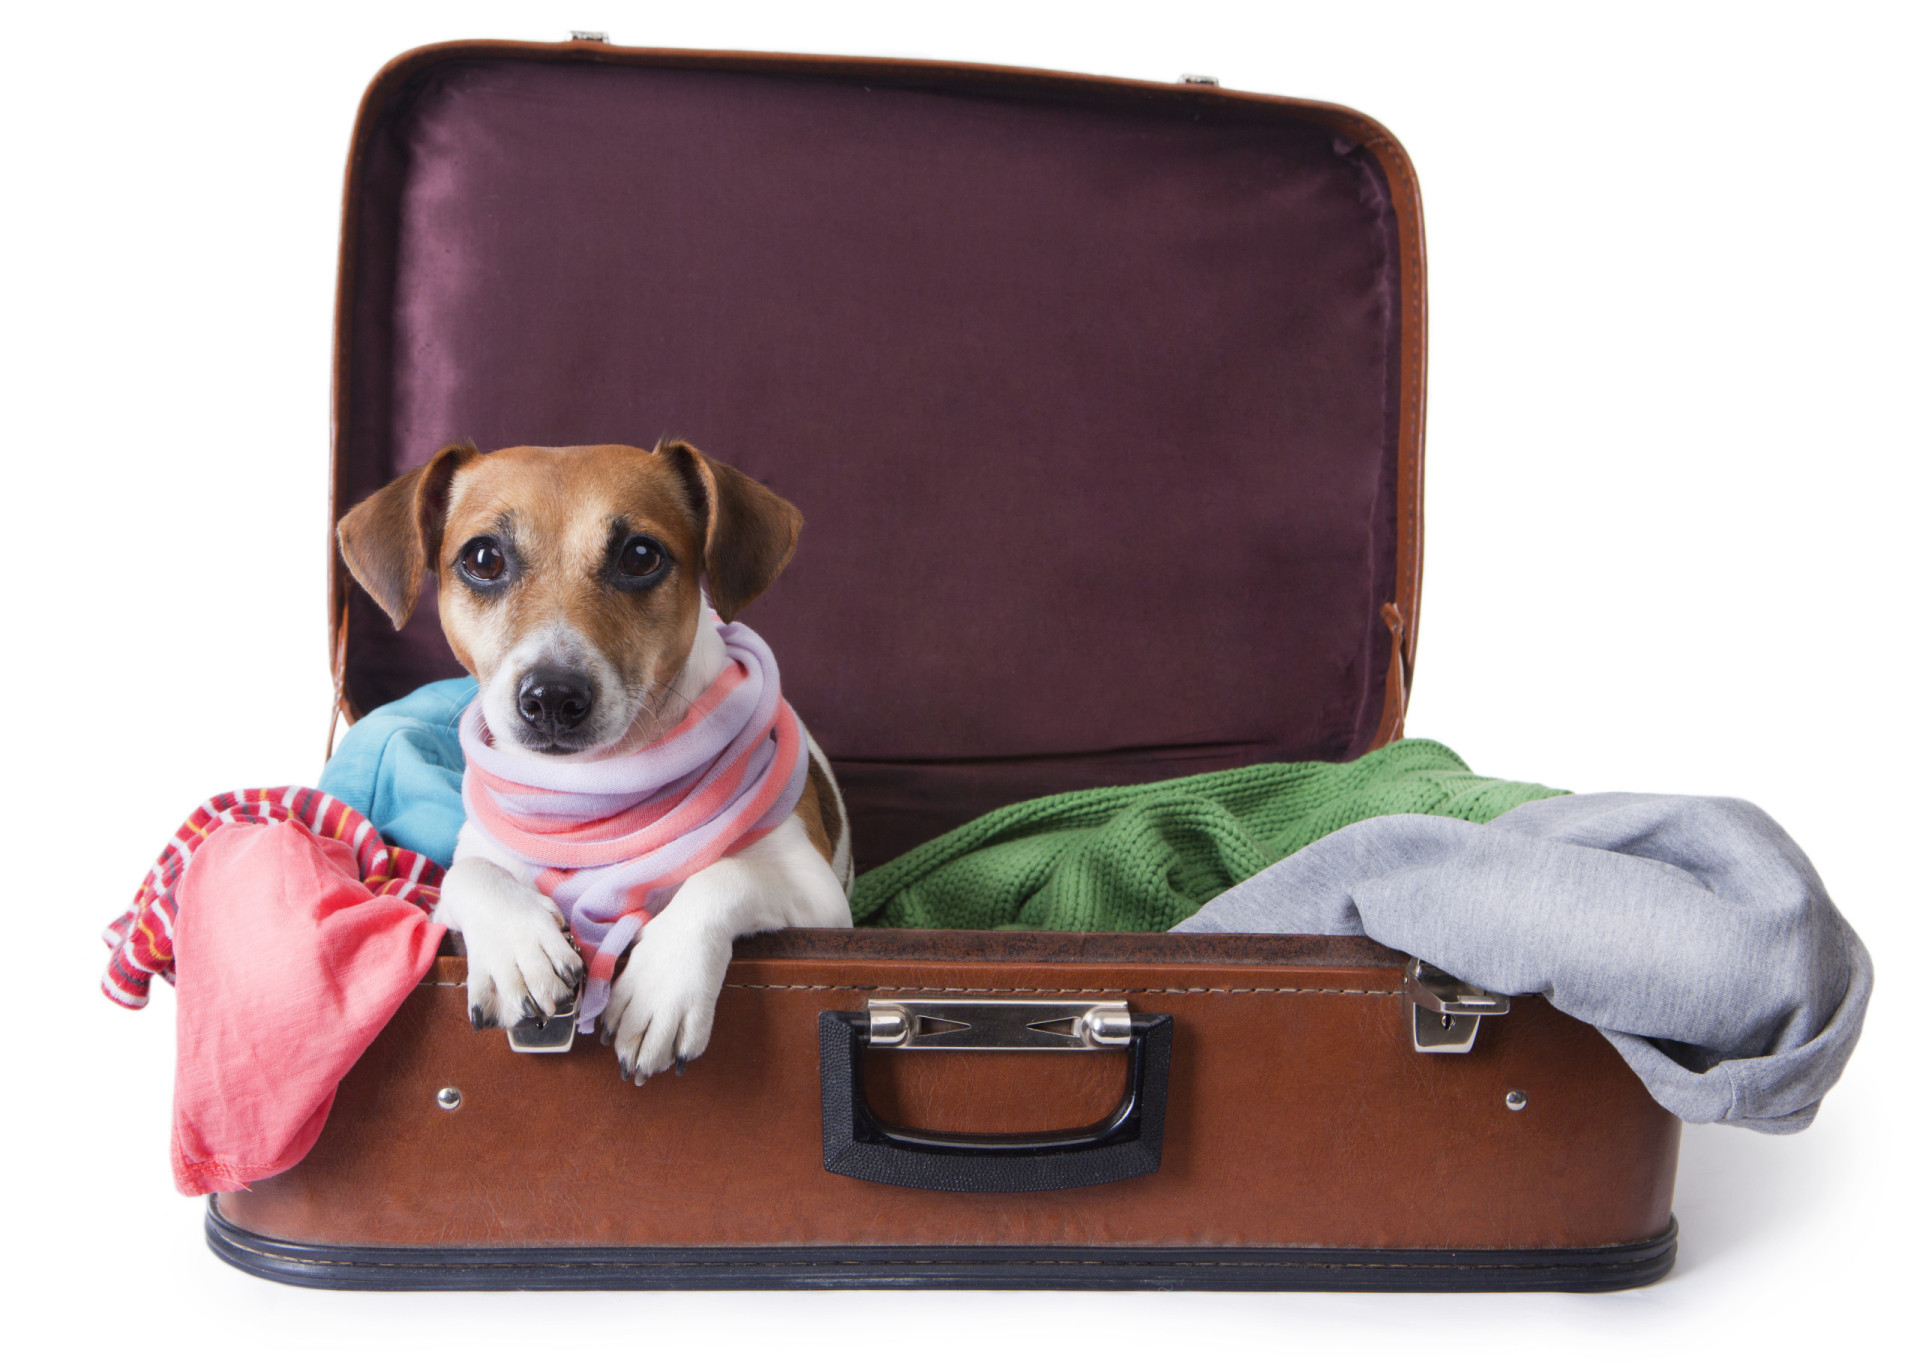 Pets in zetland. Собака с чемоданом. Животные с чемоданом. Щенки в чемодане. Путешествие с животными.